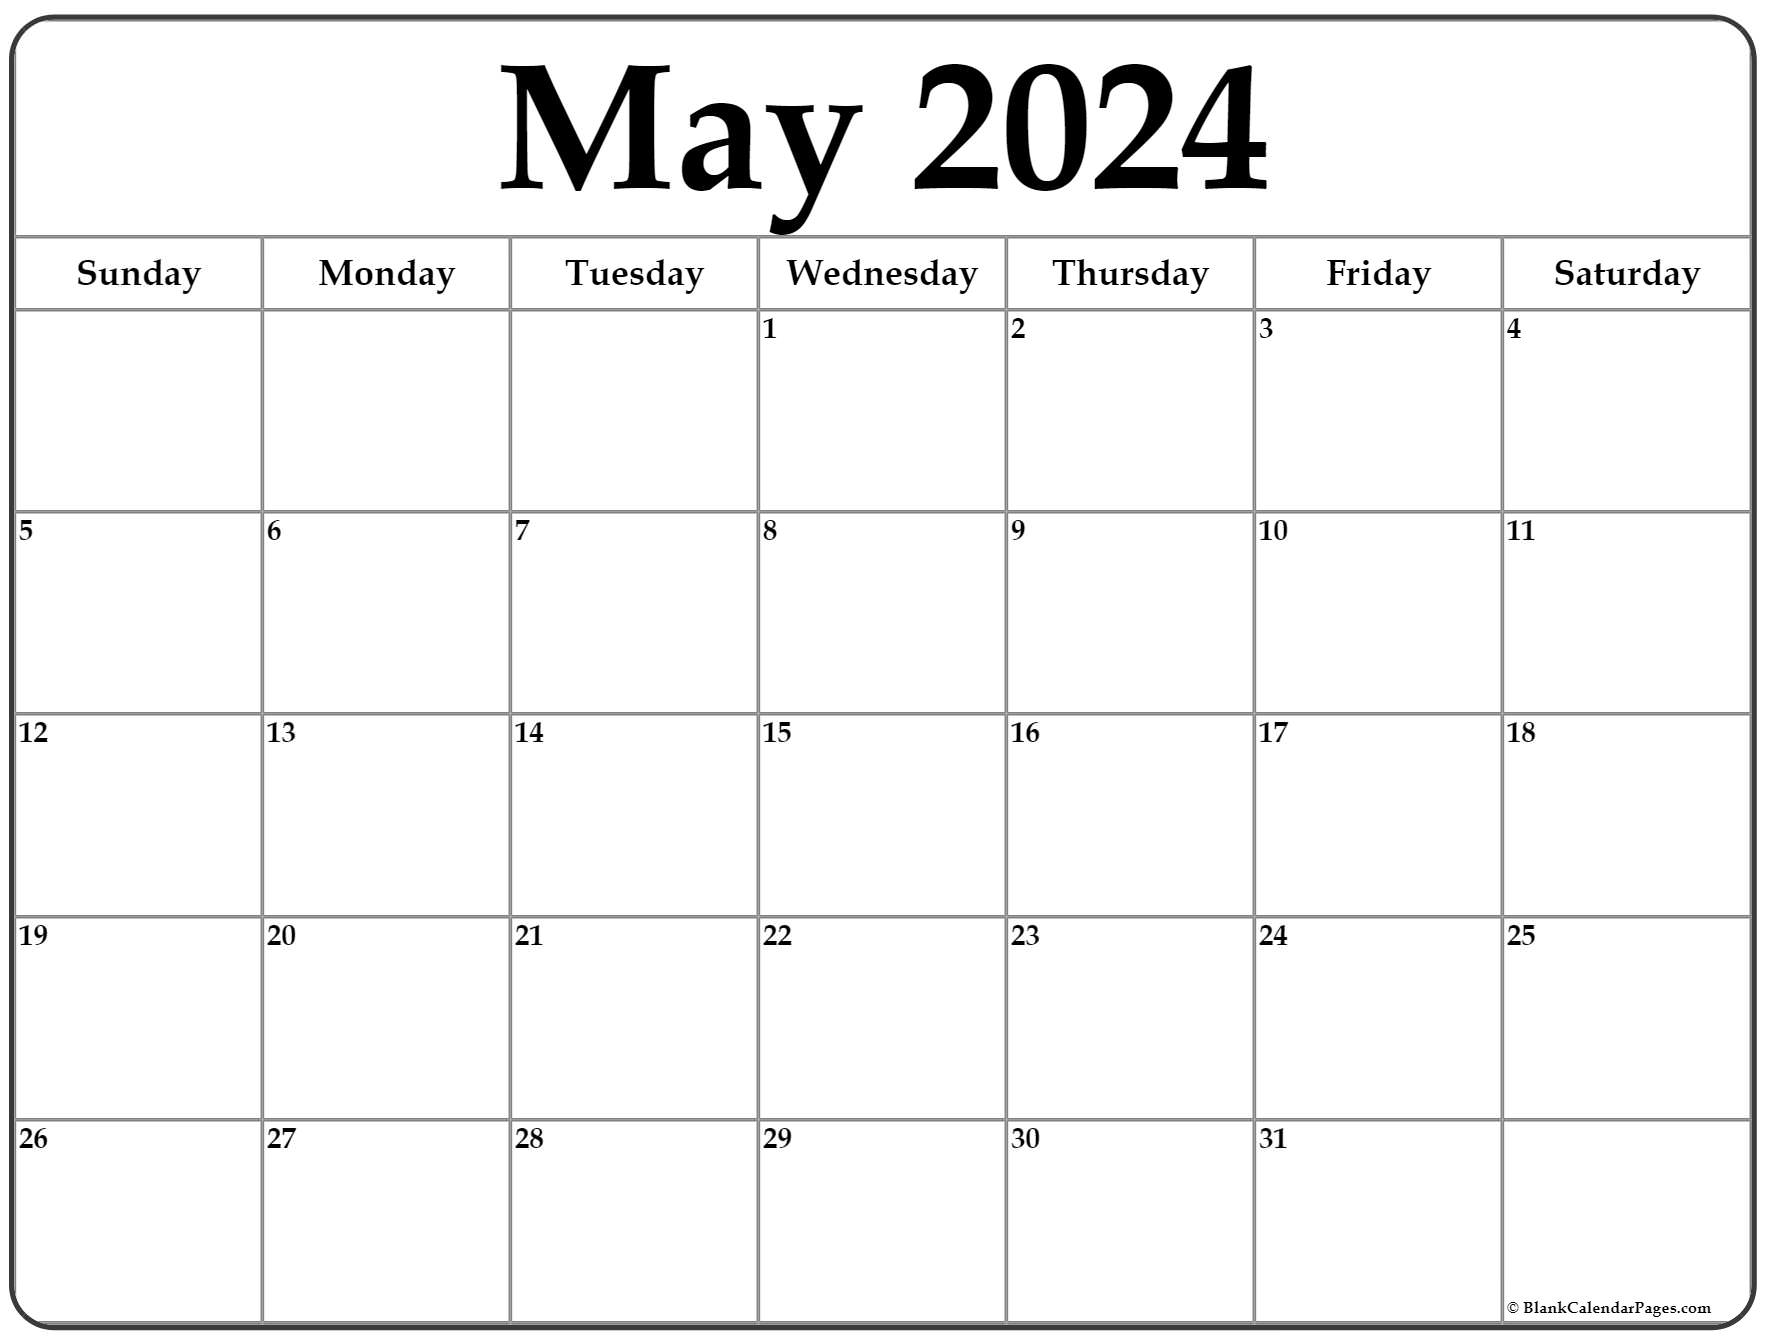 May 2022 Calendar Pdf May 2022 Calendar | Free Printable Calendar Templates